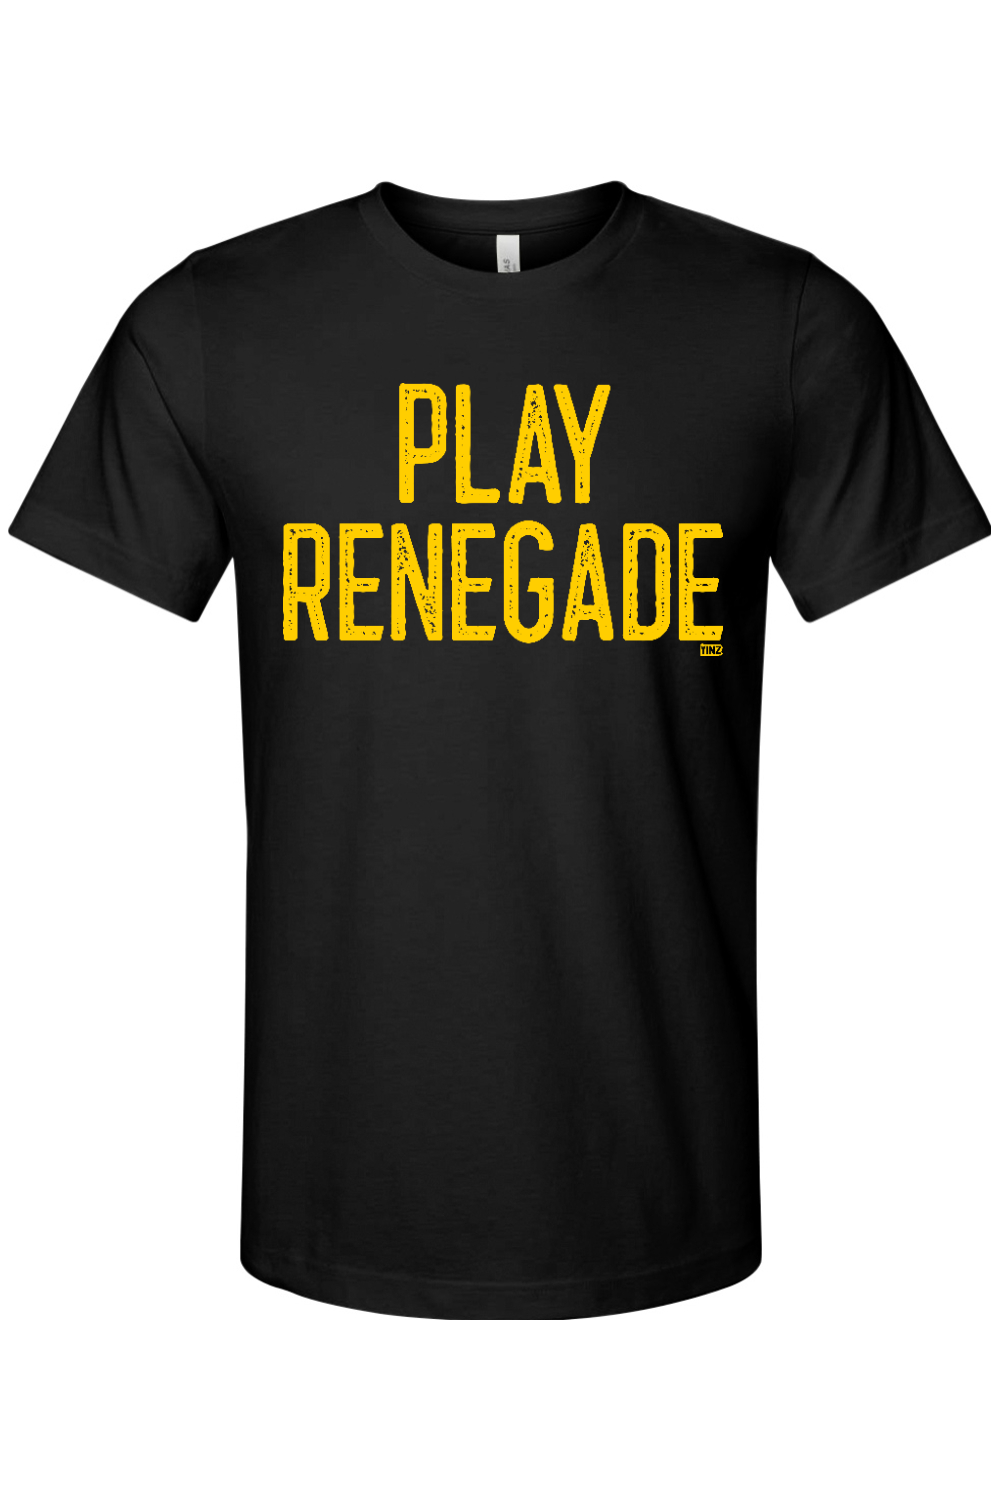 Play Renegade - Bella + Canvas Jersey Tee - Yinzylvania